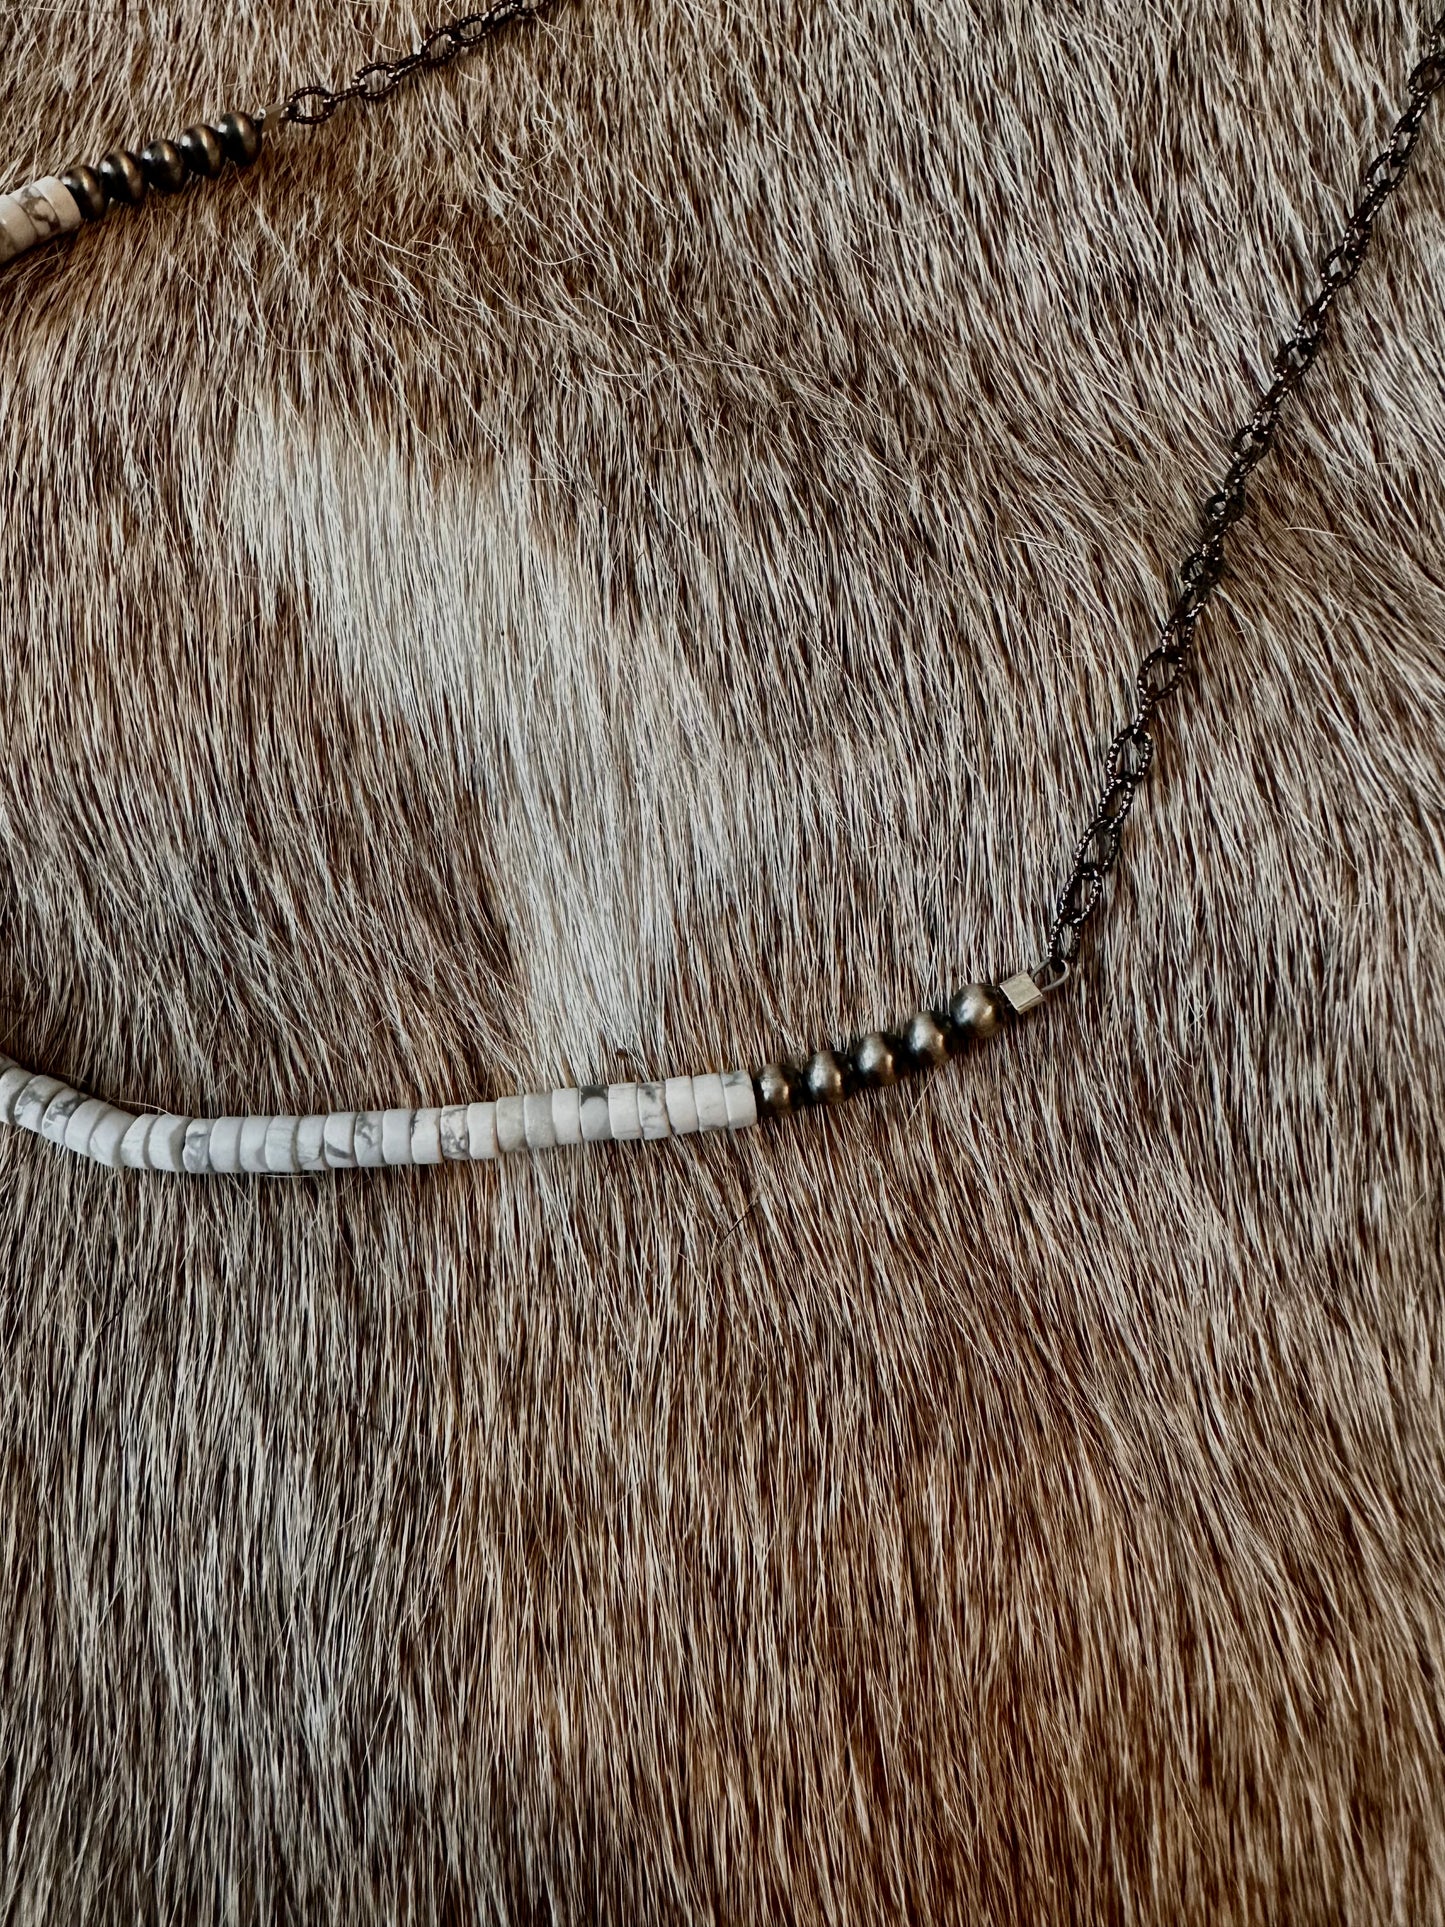 Howlite Necklace